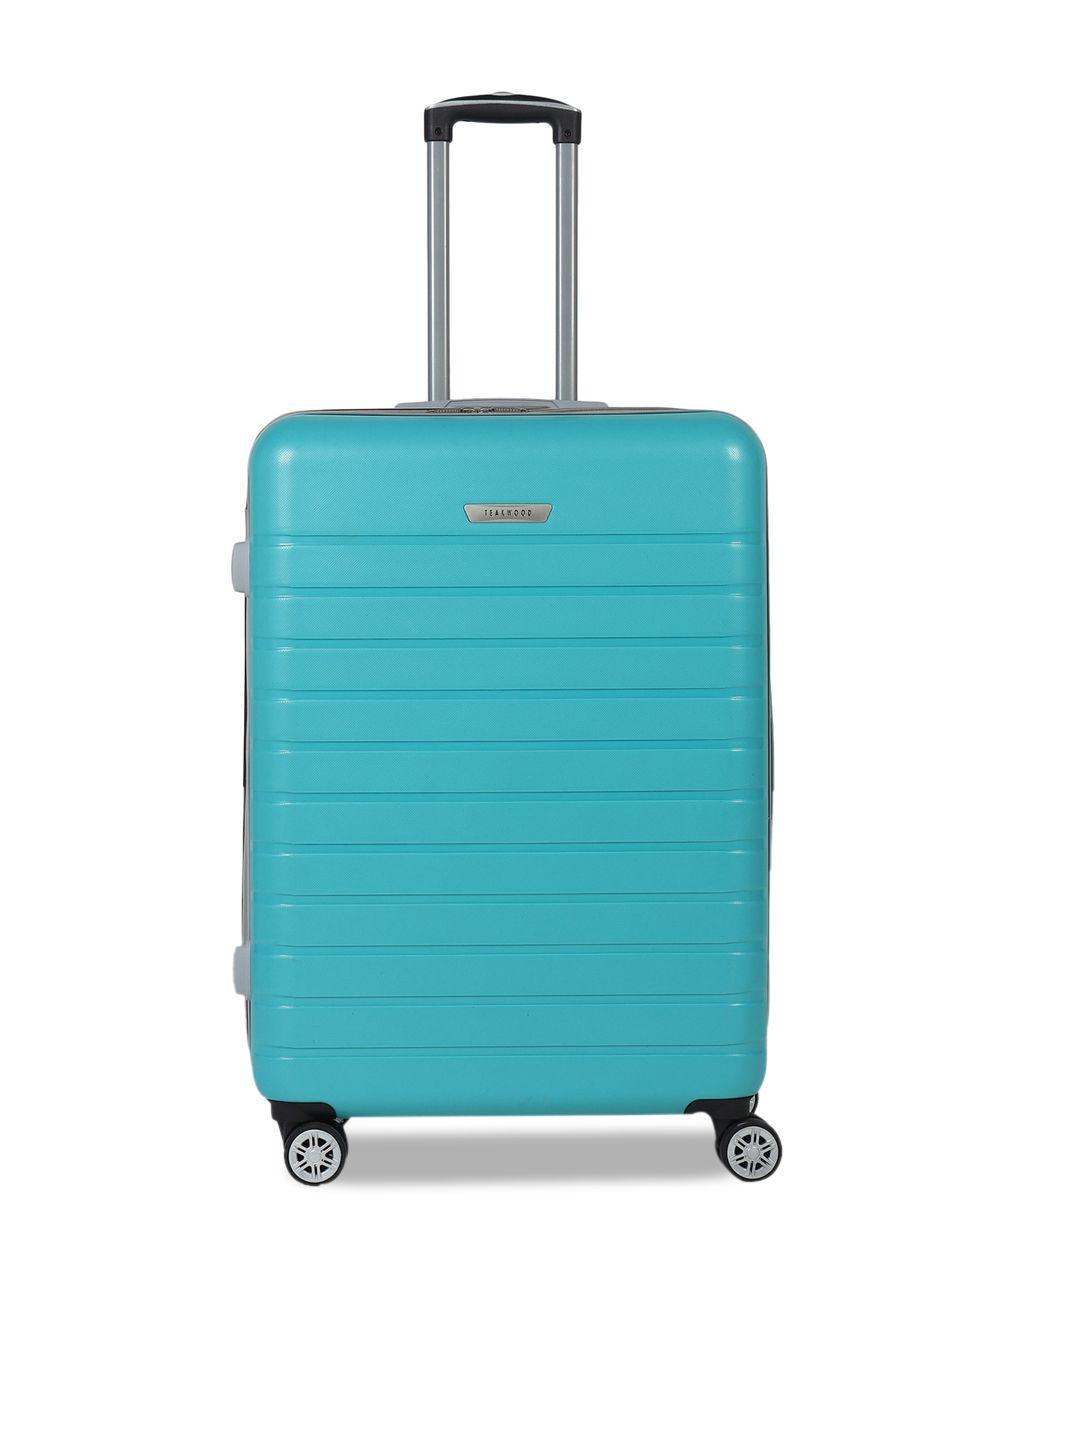 teakwood leathers turquoise blue textured hard-sided large trolley suitcase